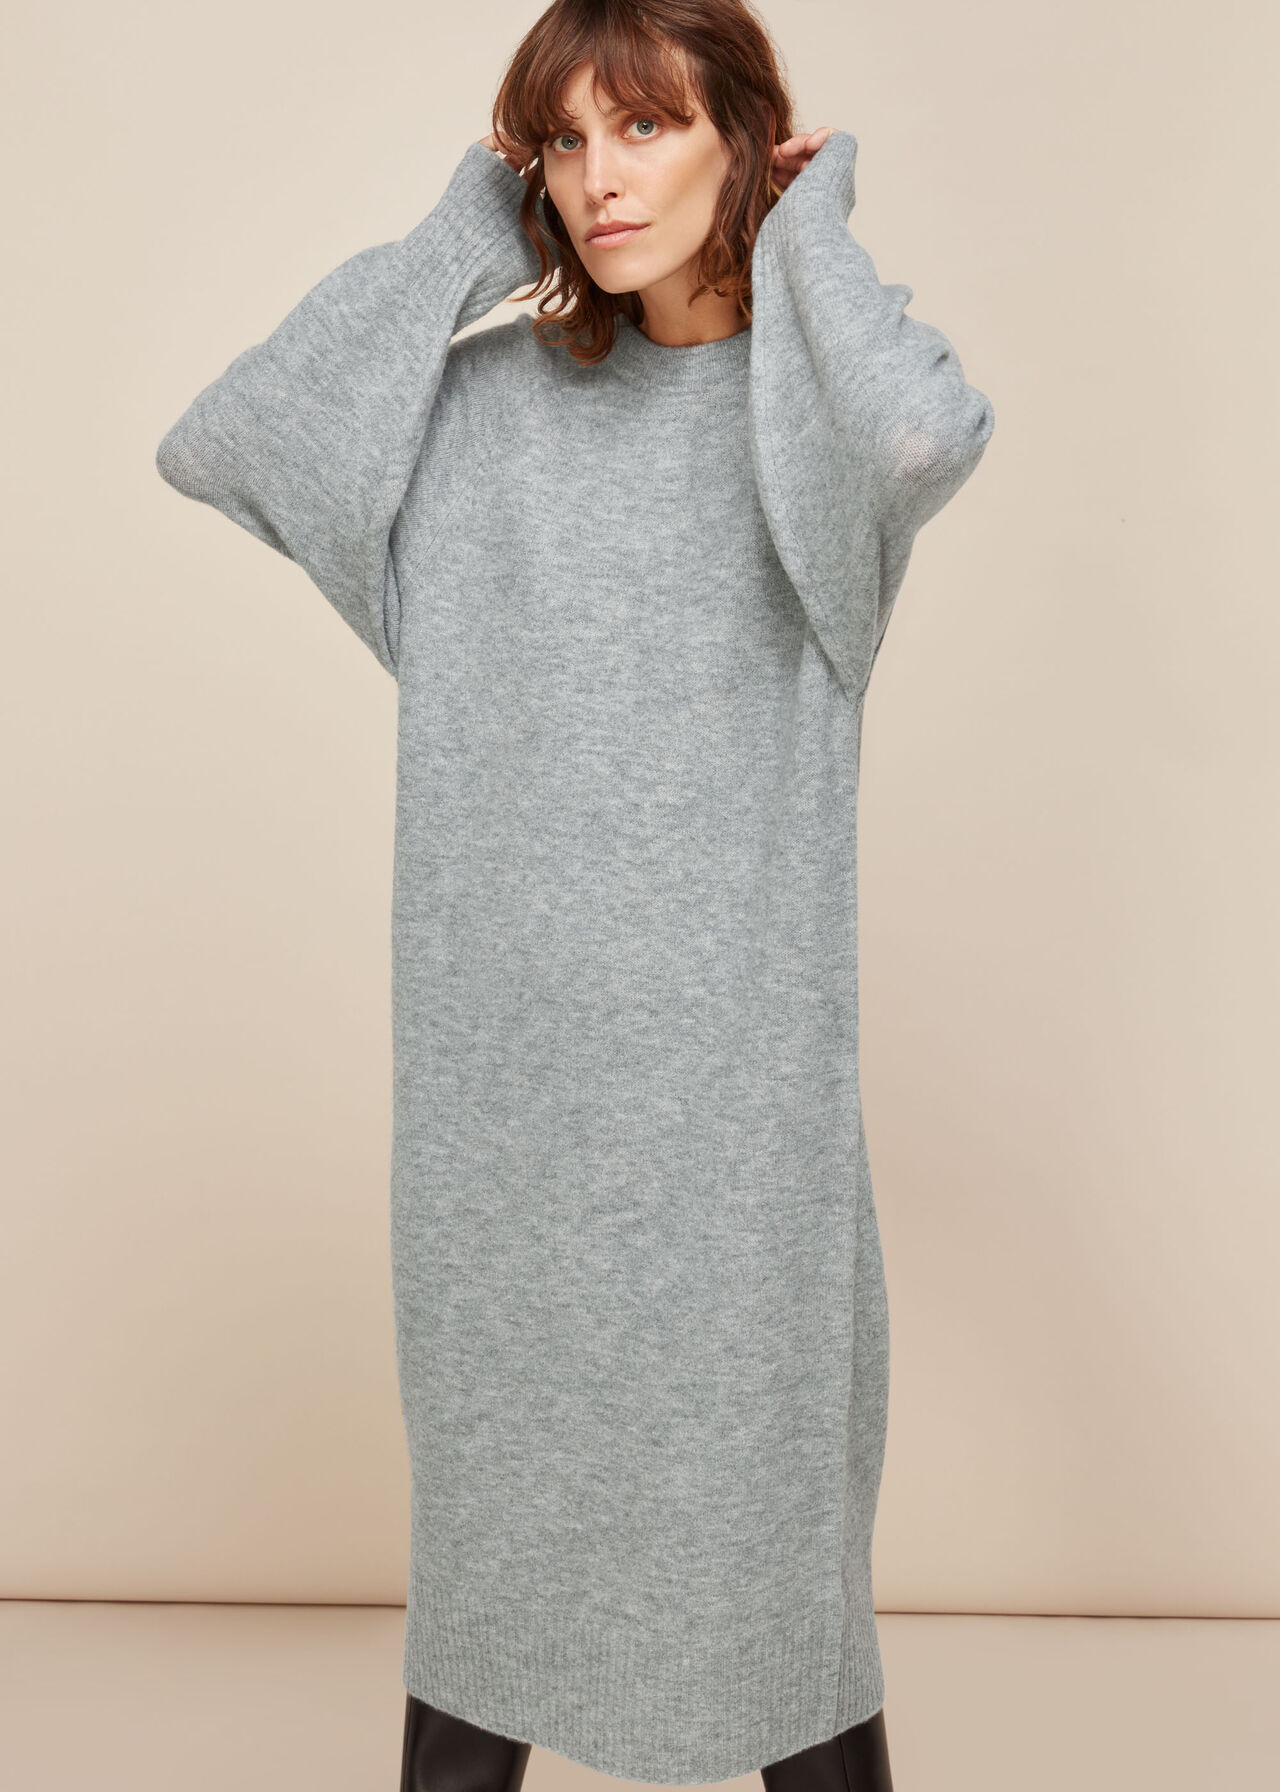 Midi Length Knit Dress